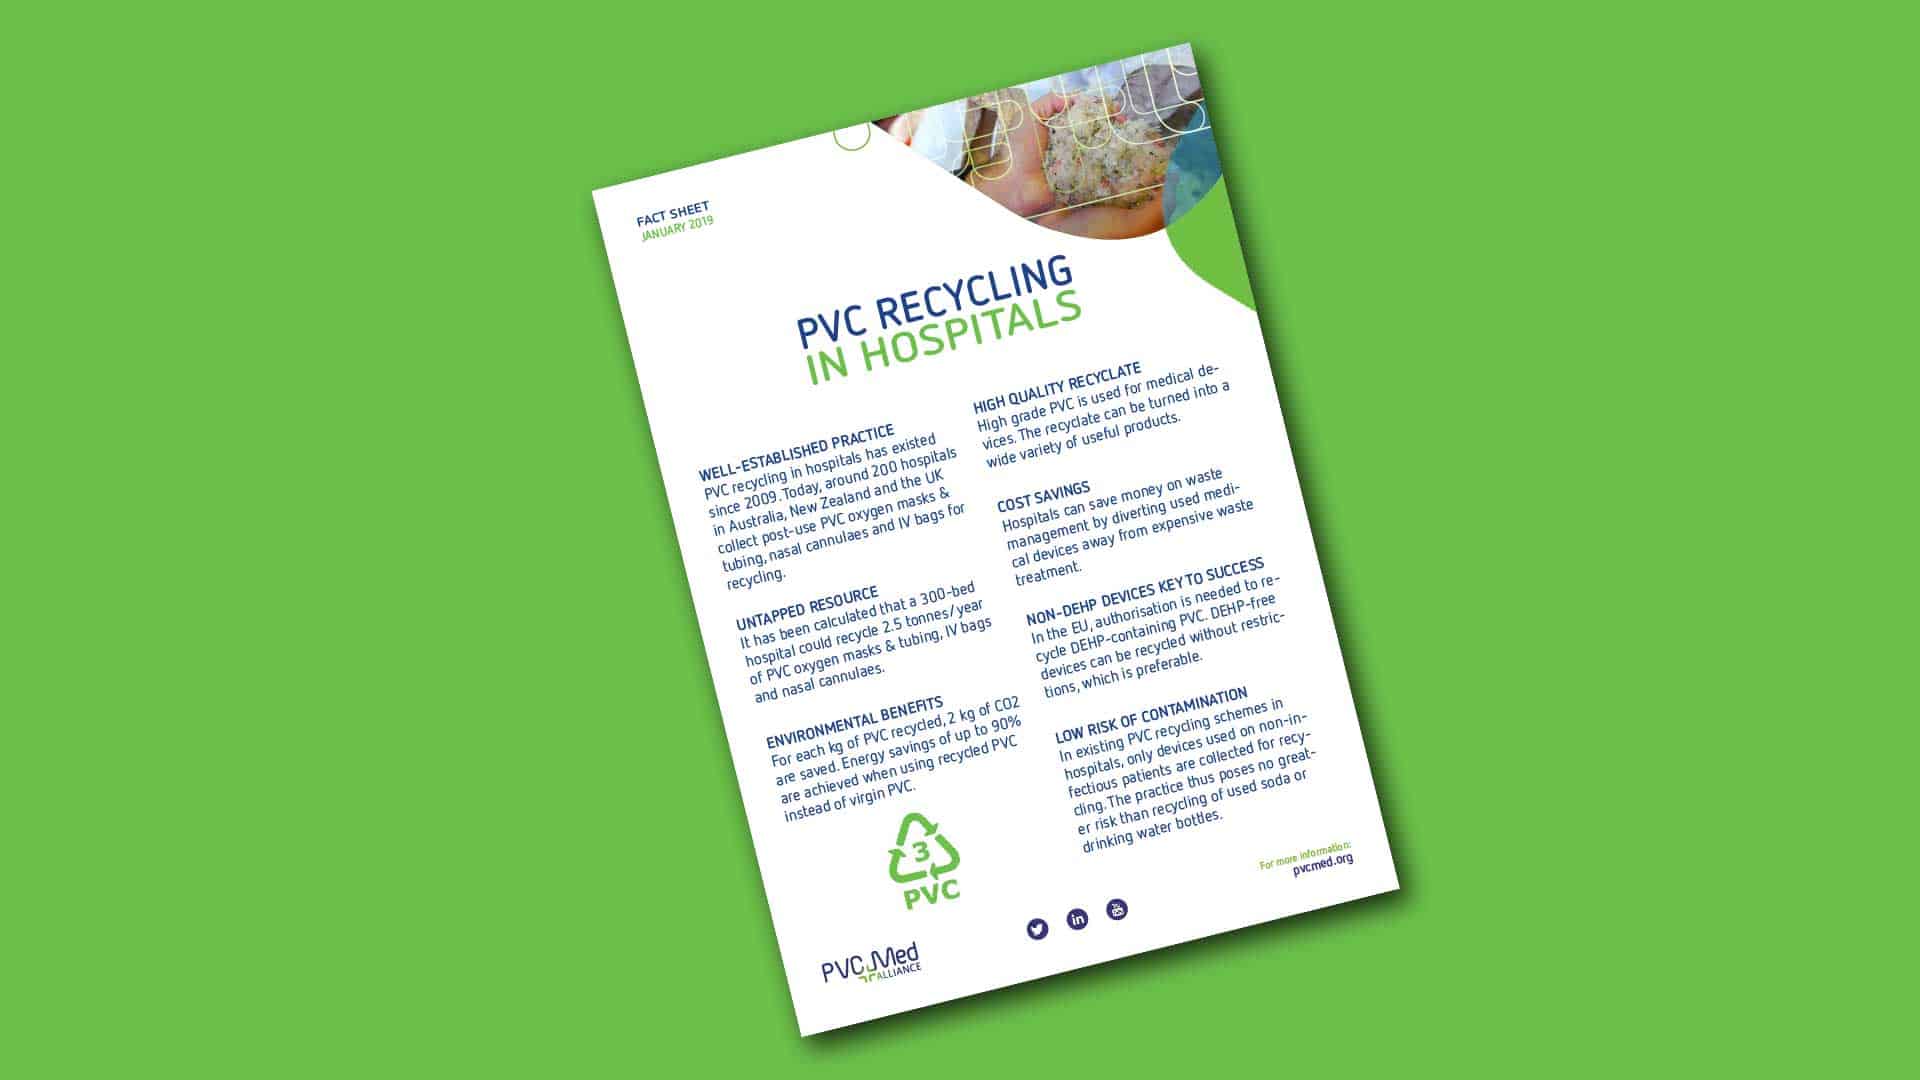 pvc hospitals recycling circular economy factsheet